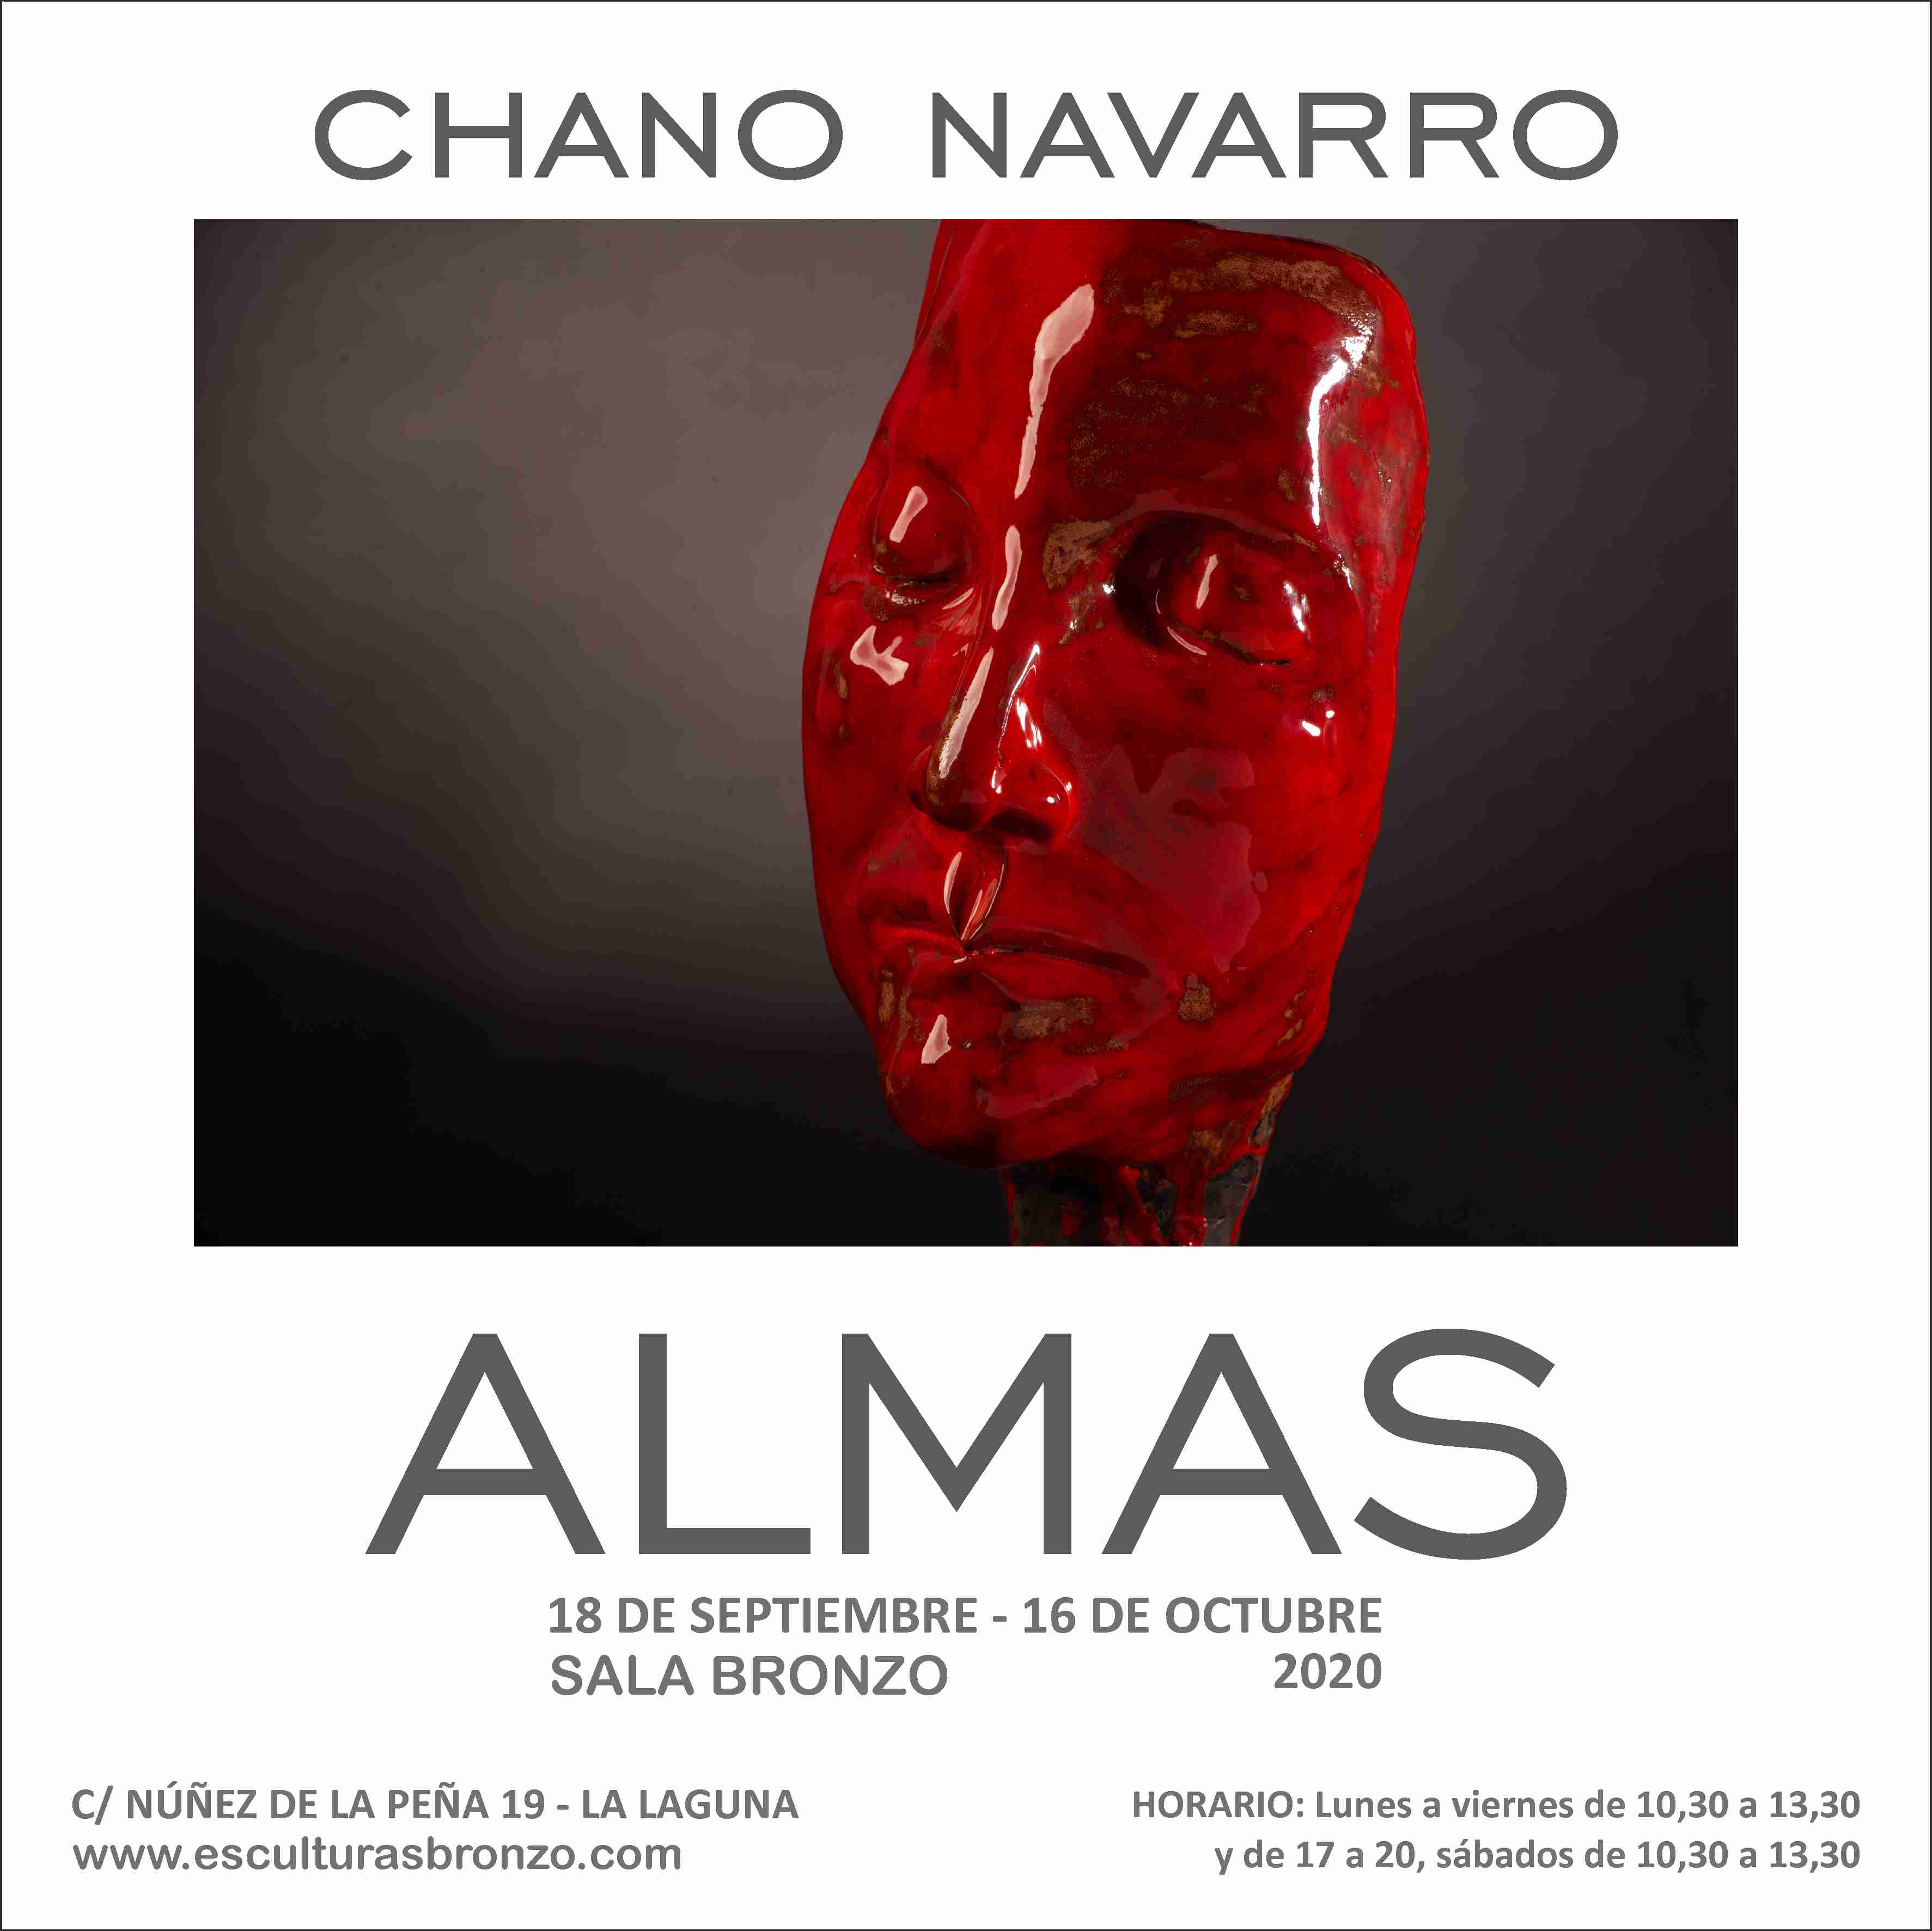 Exposición "Almas" de Chano Navarro Betancor en Espacio Bronzo, La Laguna. Tenerife